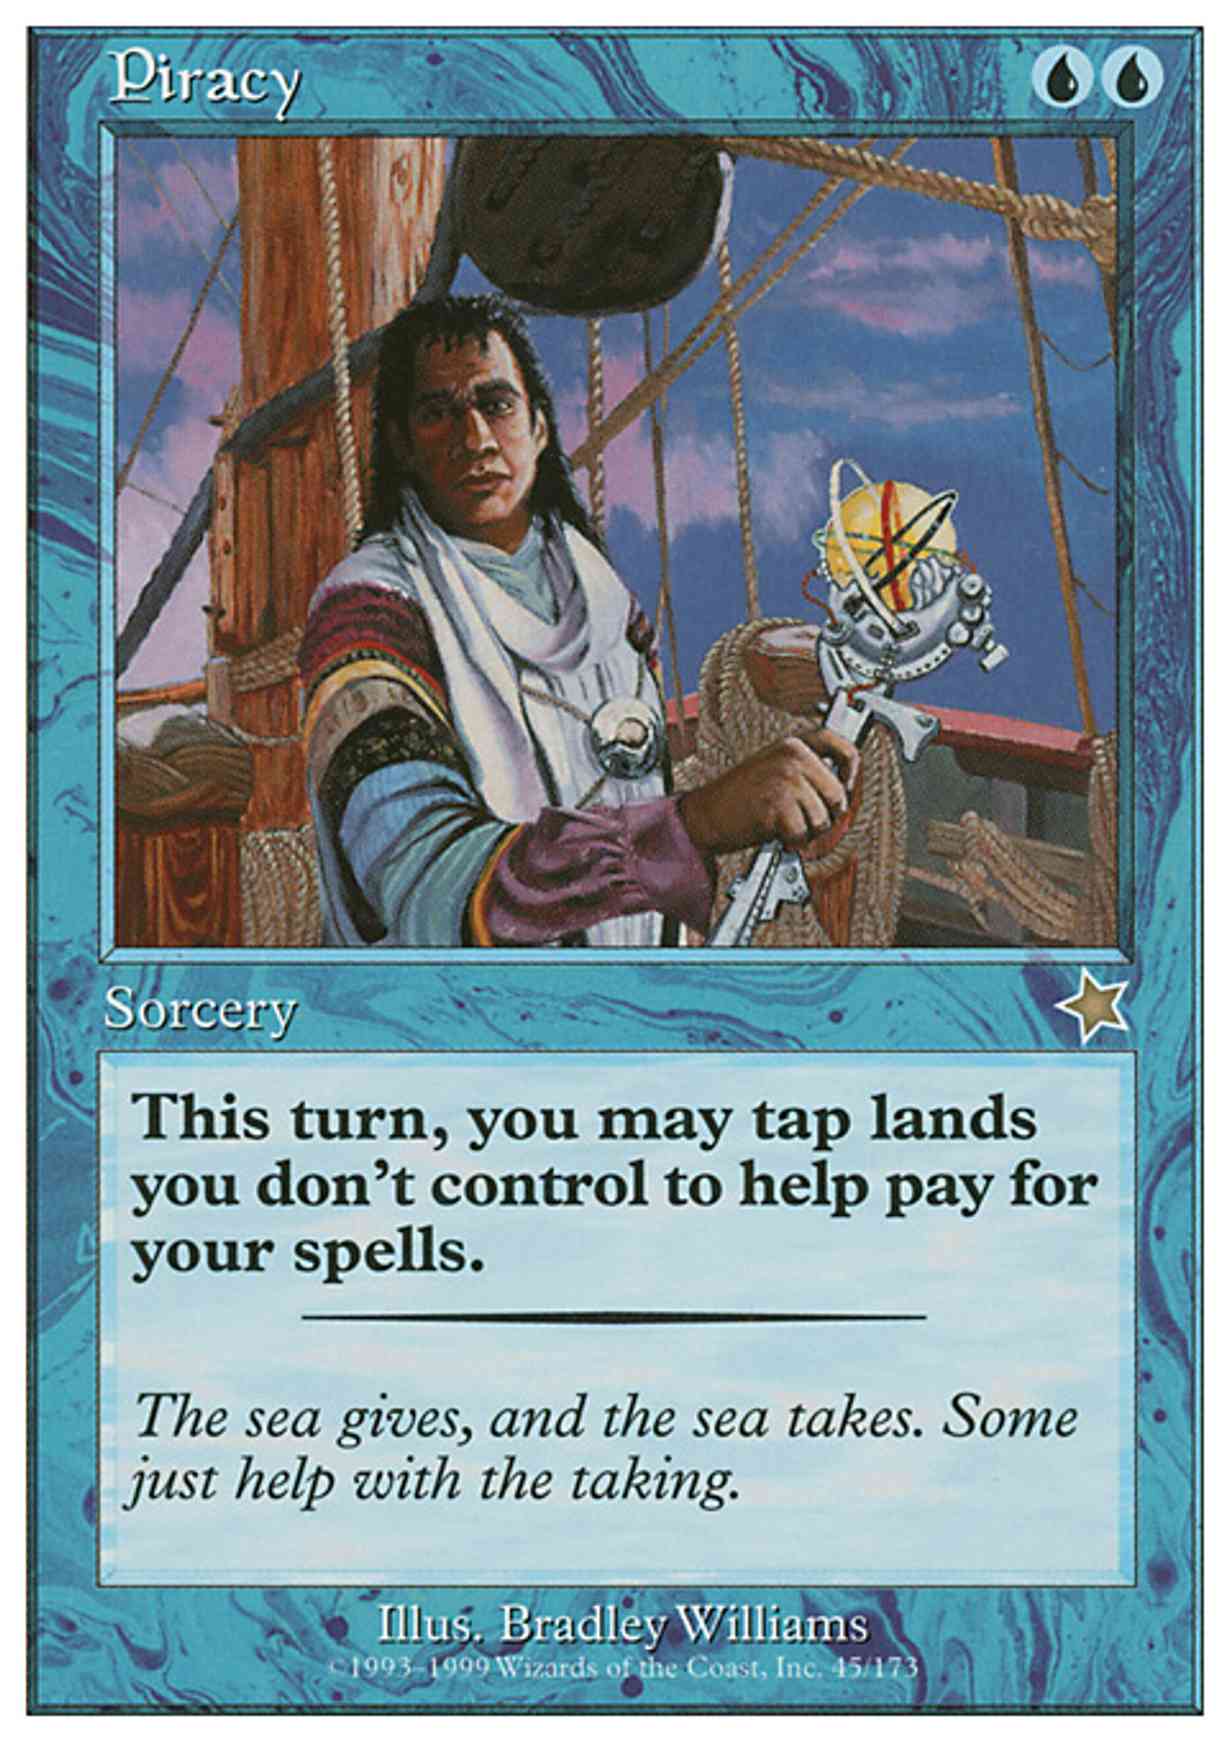 Piracy magic card front